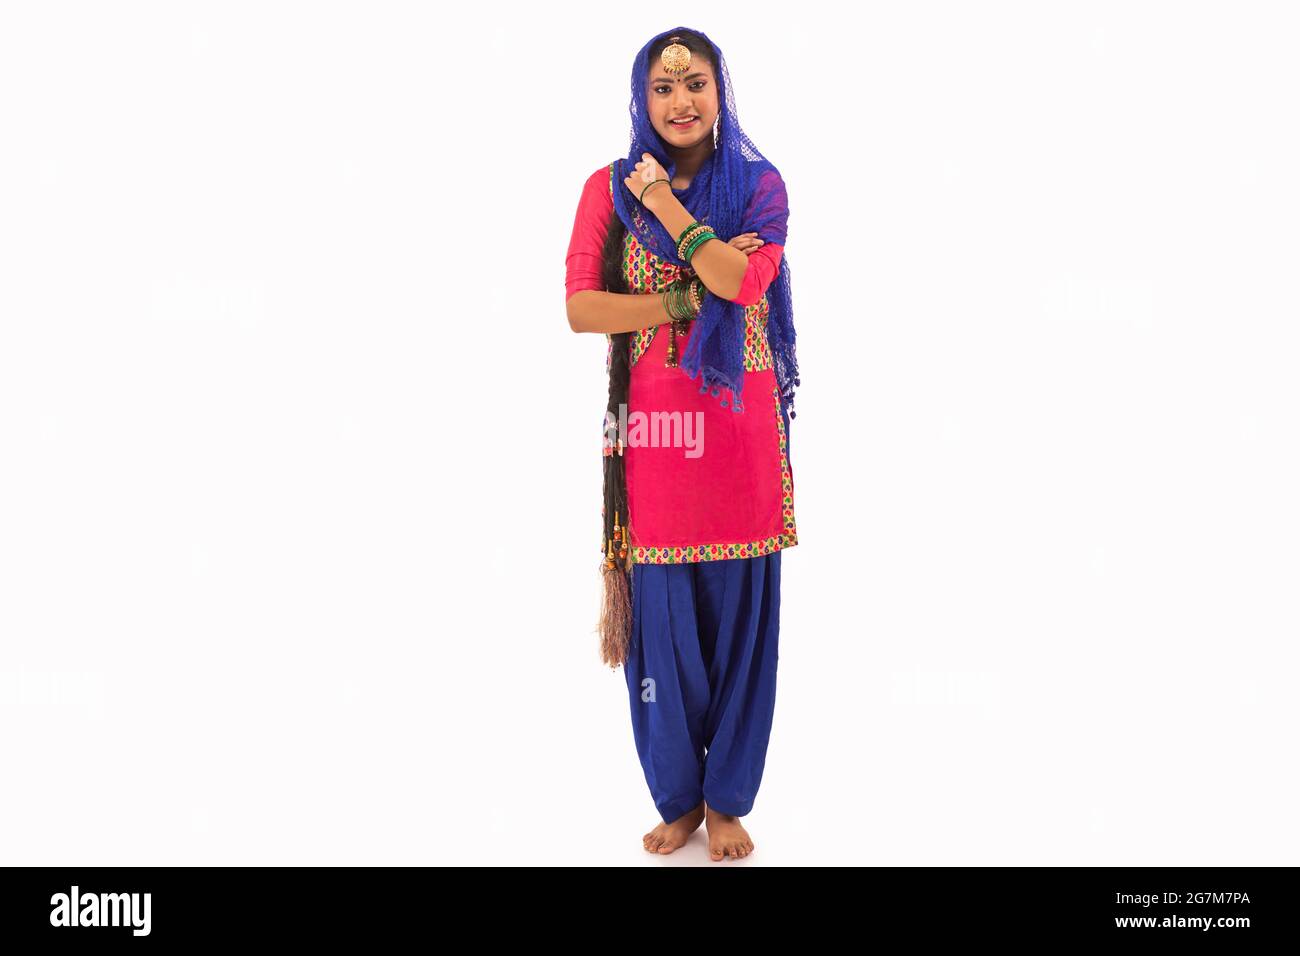 manidrehar❤ | Bad girl outfits, Indian wedding fashion, Punjabi fashion